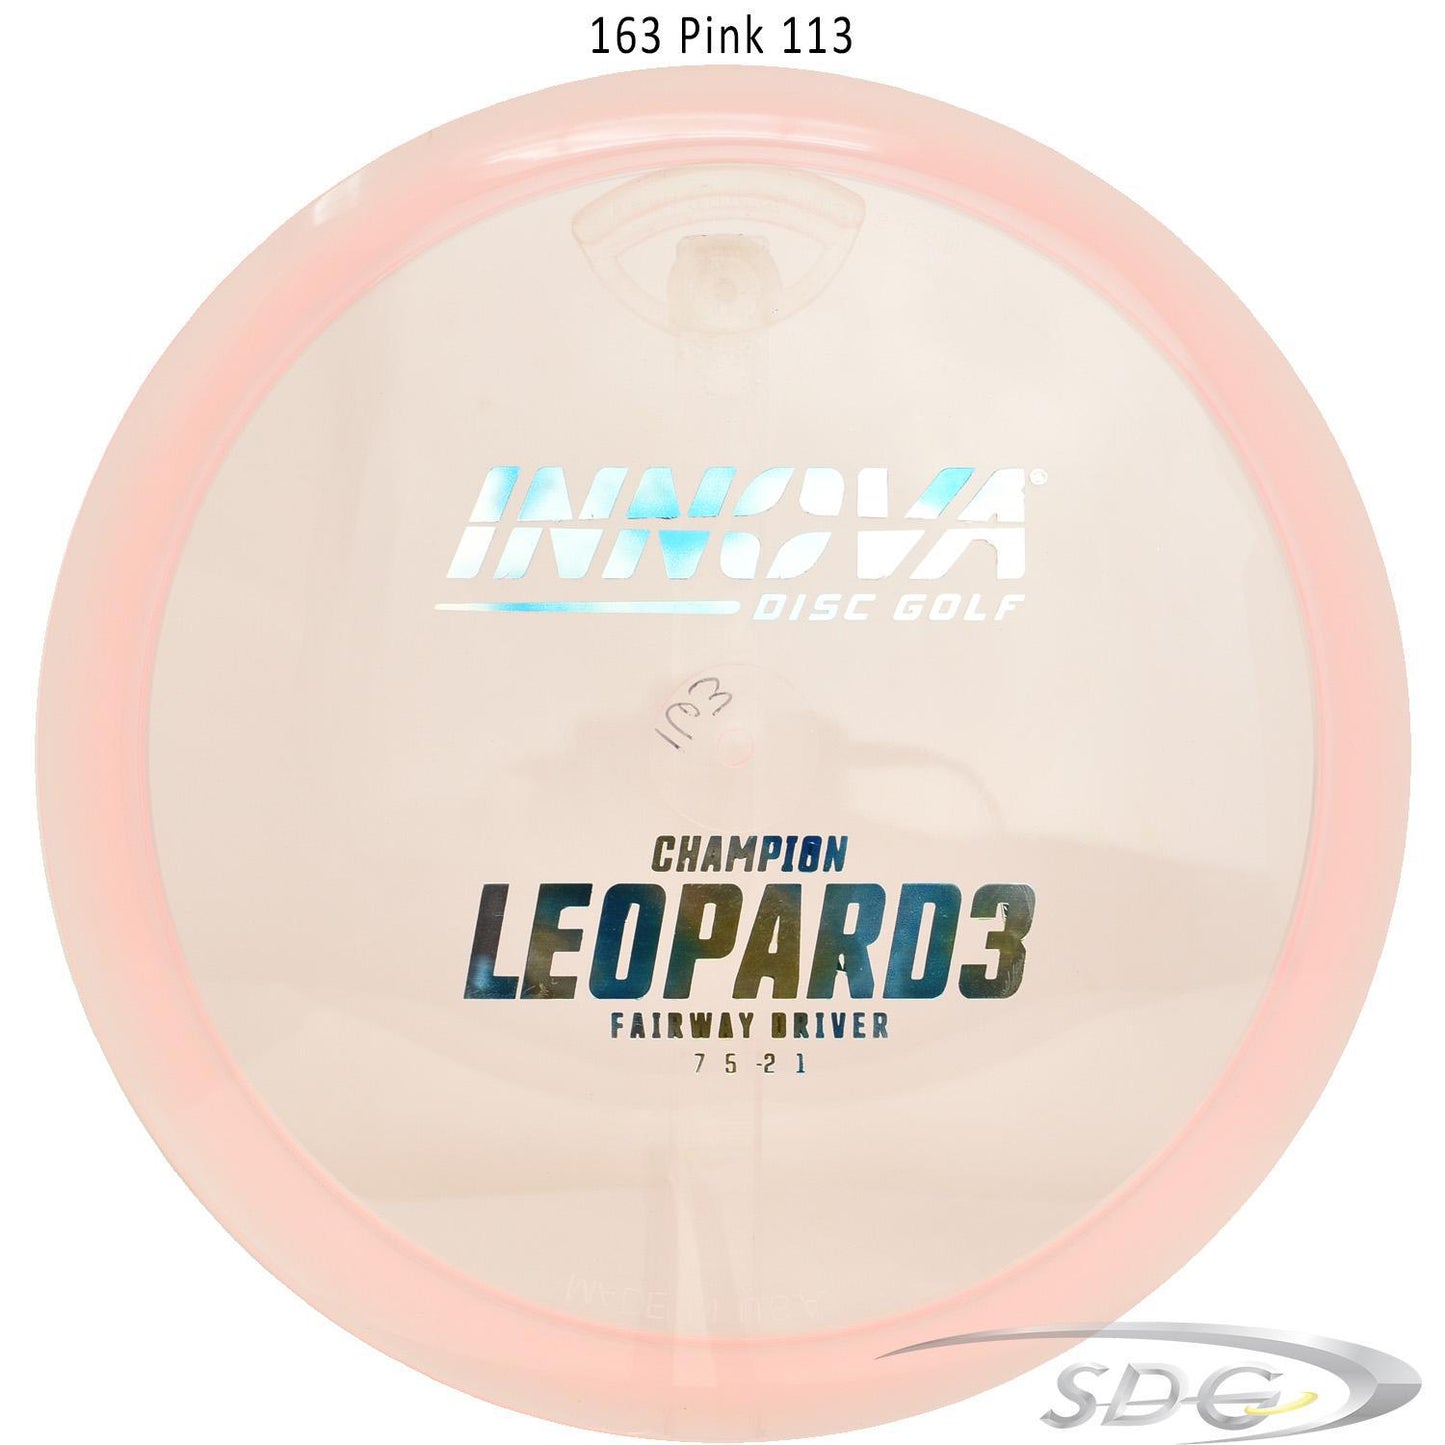 innova-champion-leopard3-disc-golf-fairway-driver 163 Pink 113 